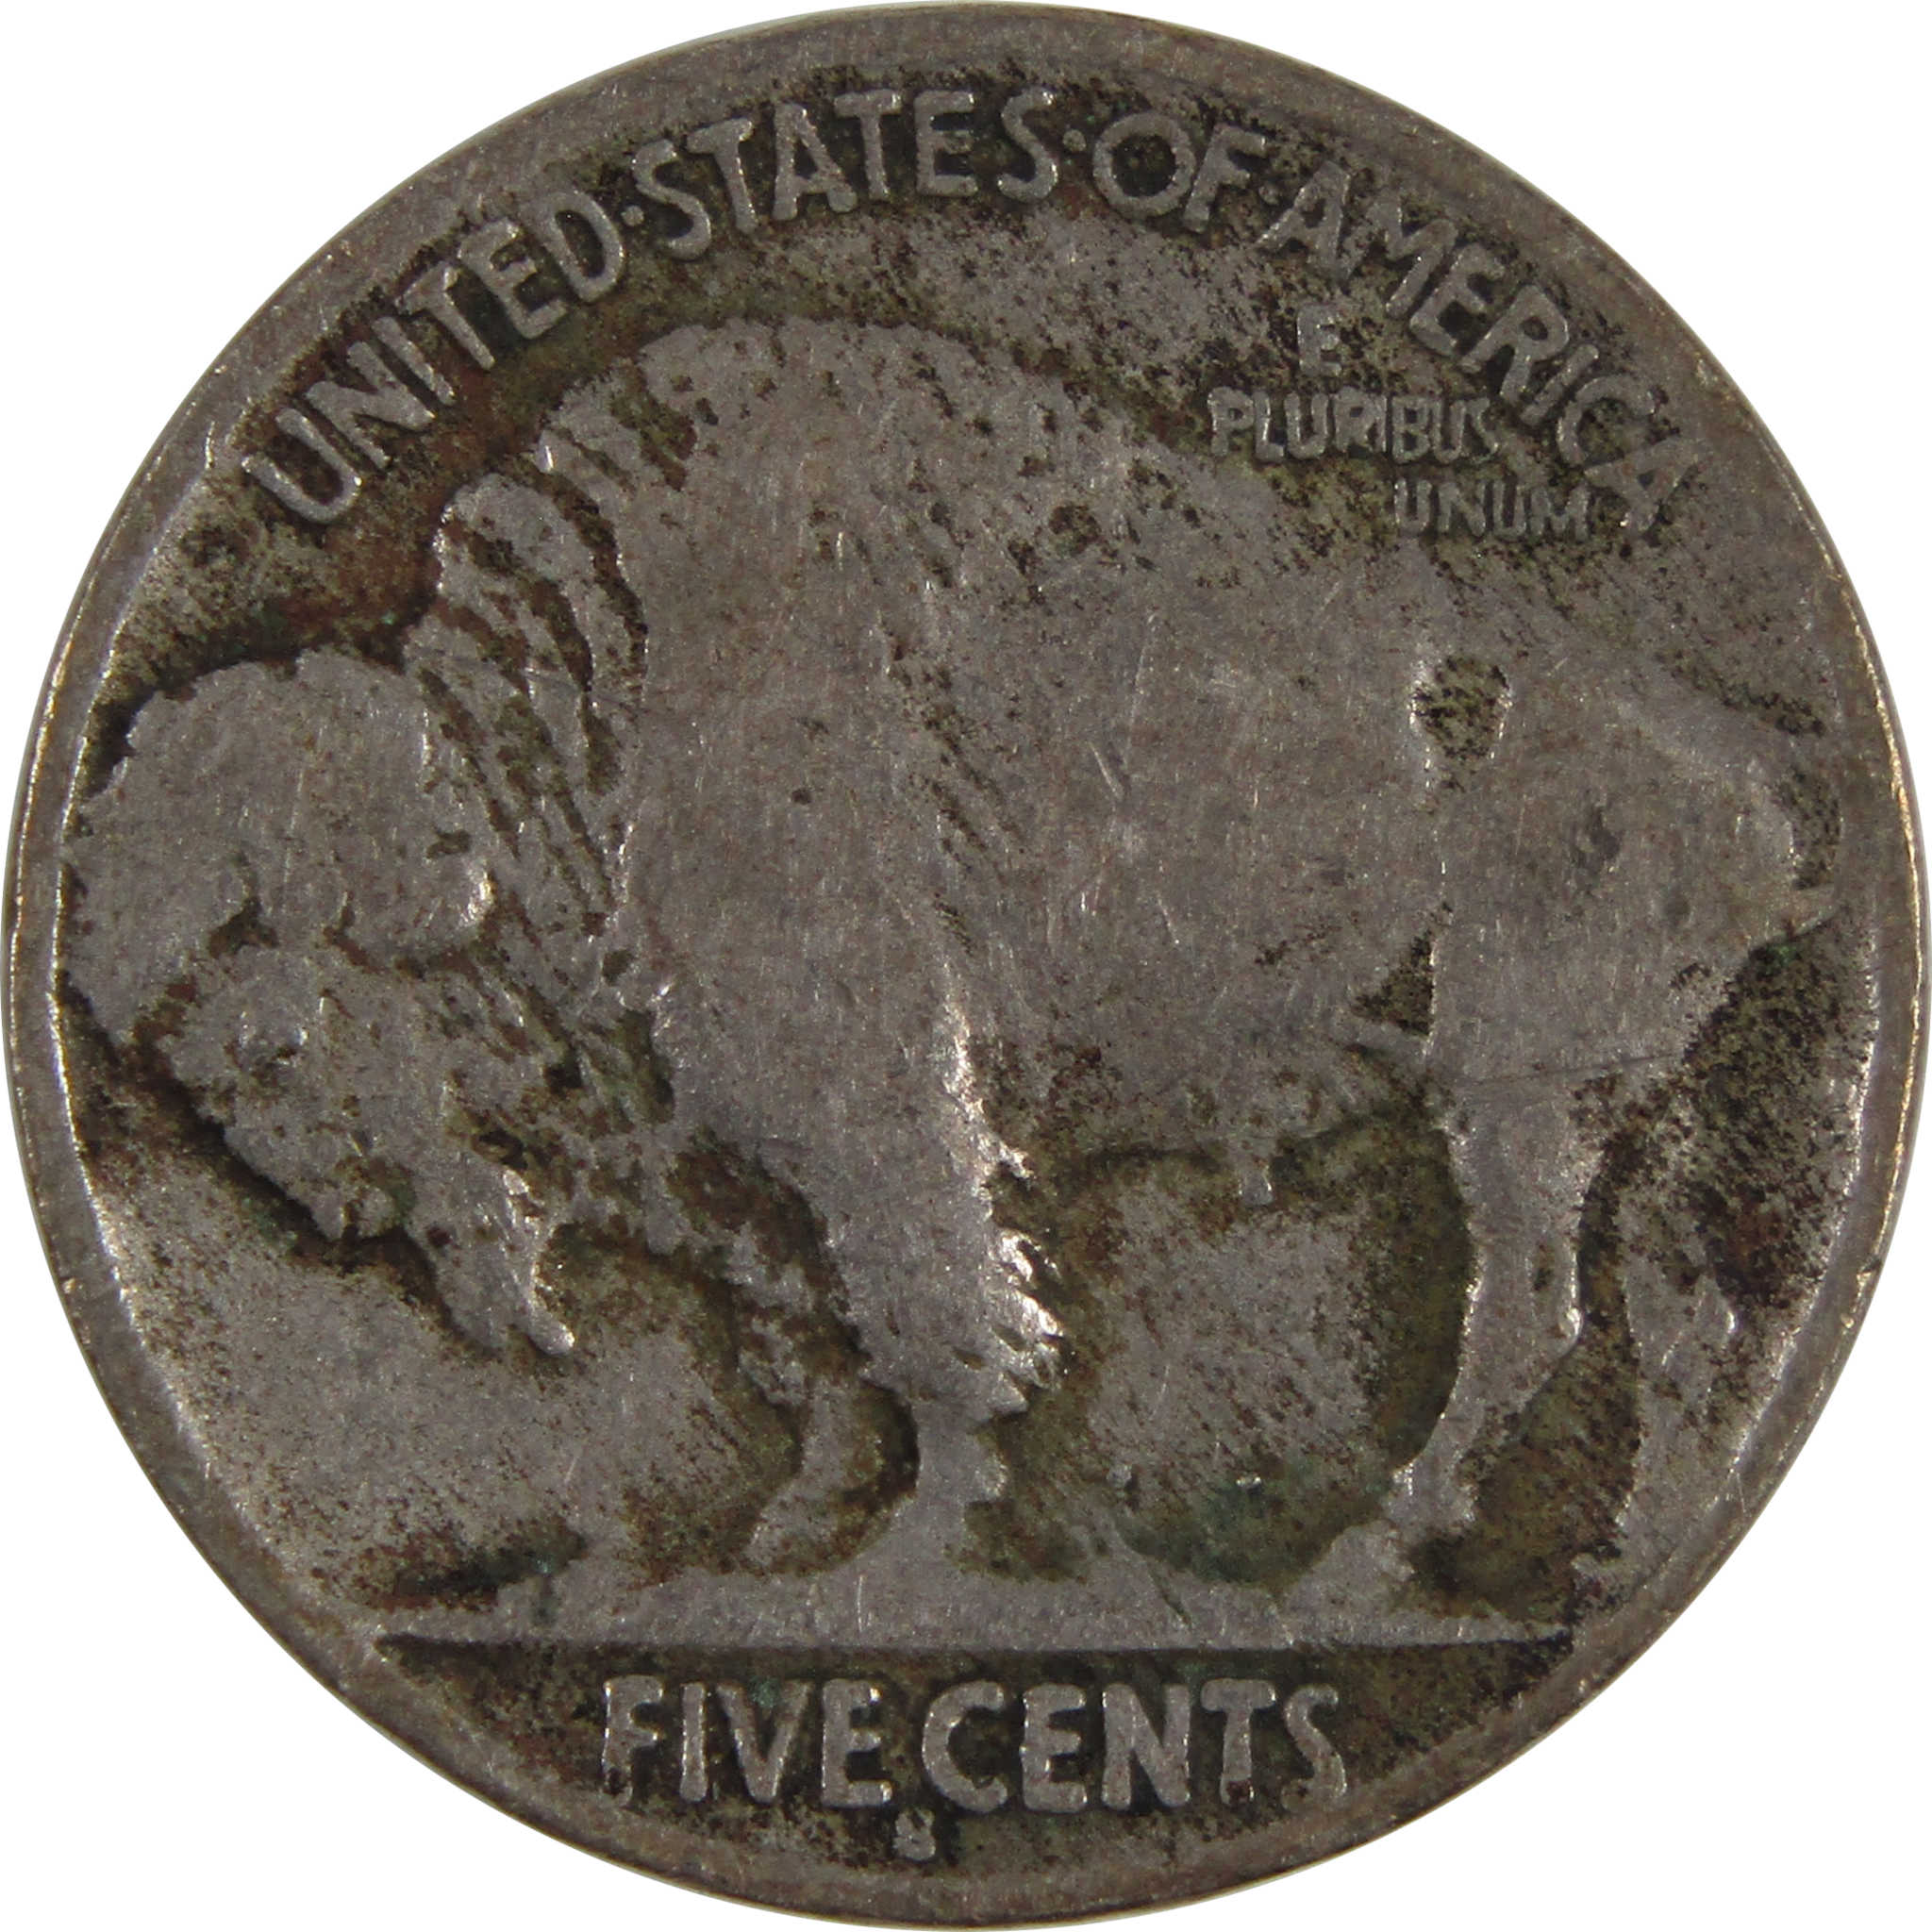 1914 S Indian Head Buffalo Nickel VG Very Good Details 5c SKU:I2742